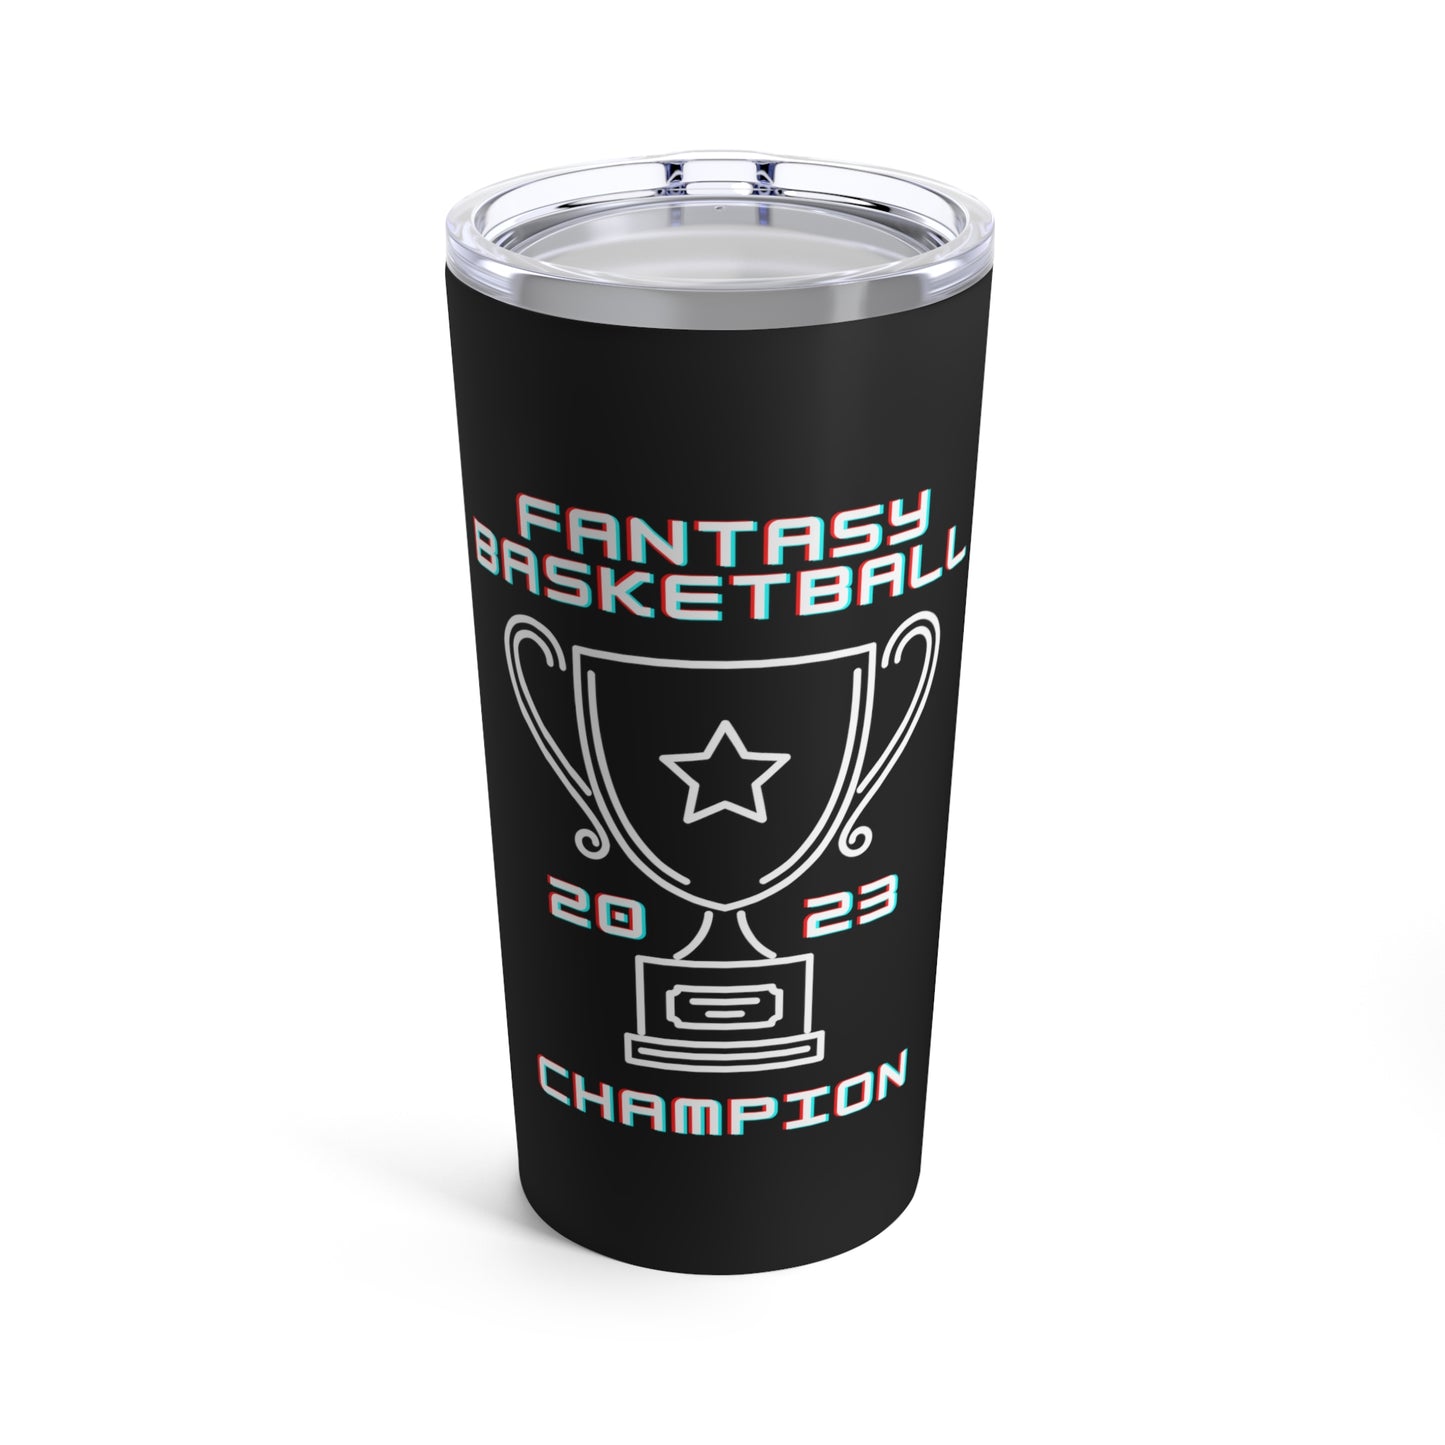 2023 Fantasy Basketball Champion Fantasy Champ Tumbler 20oz Beverage Container